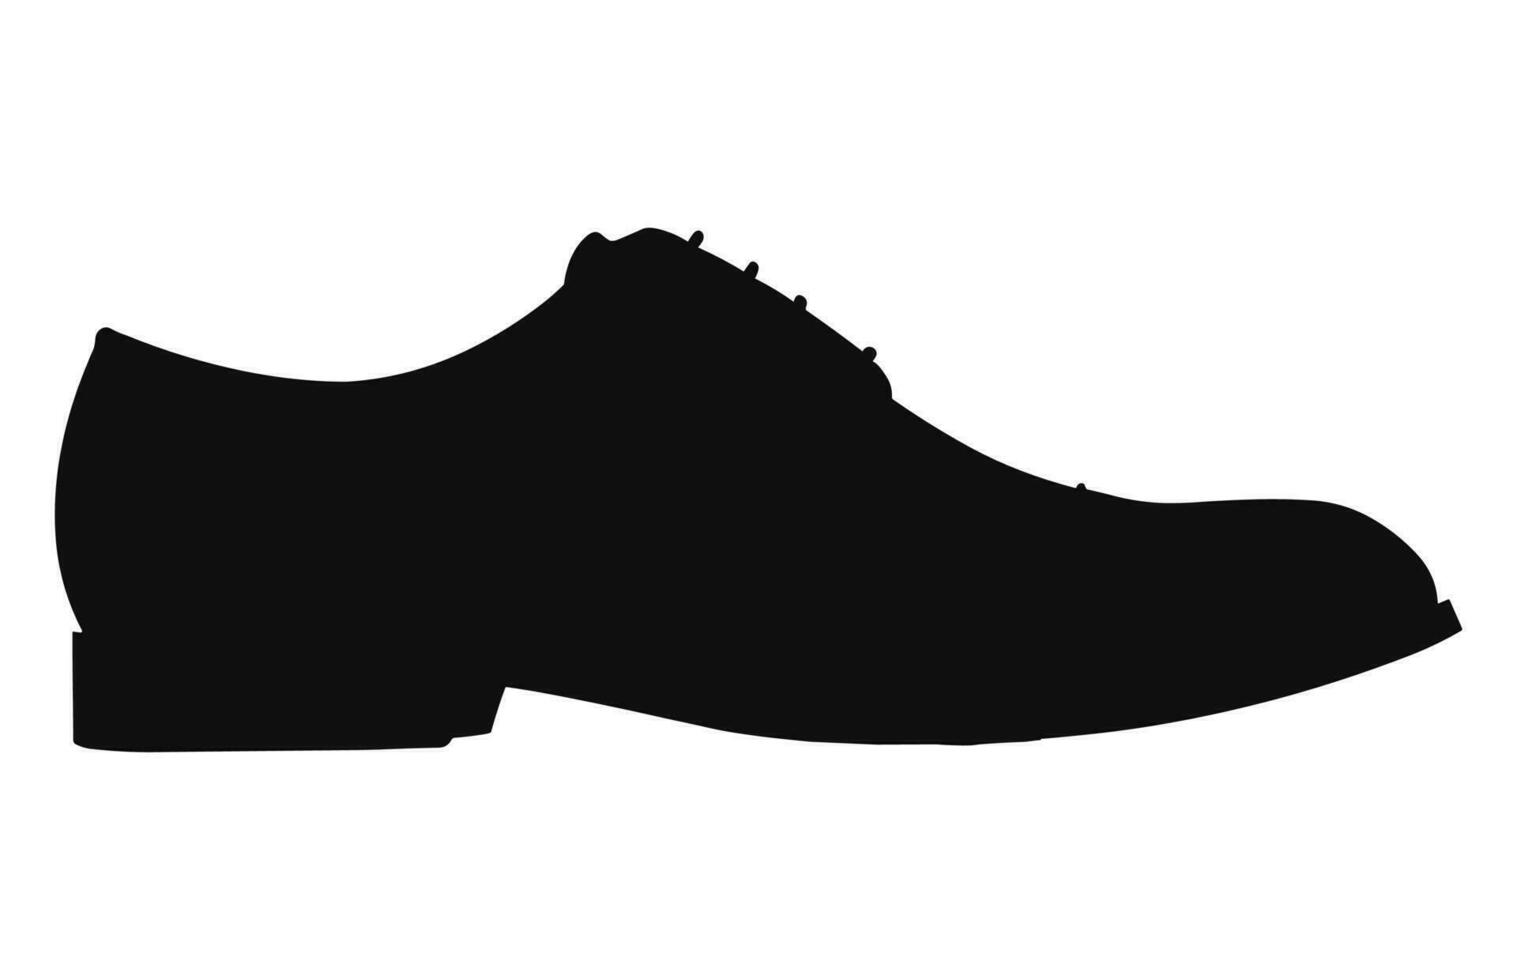 A Male Shoe black silhouette vector free